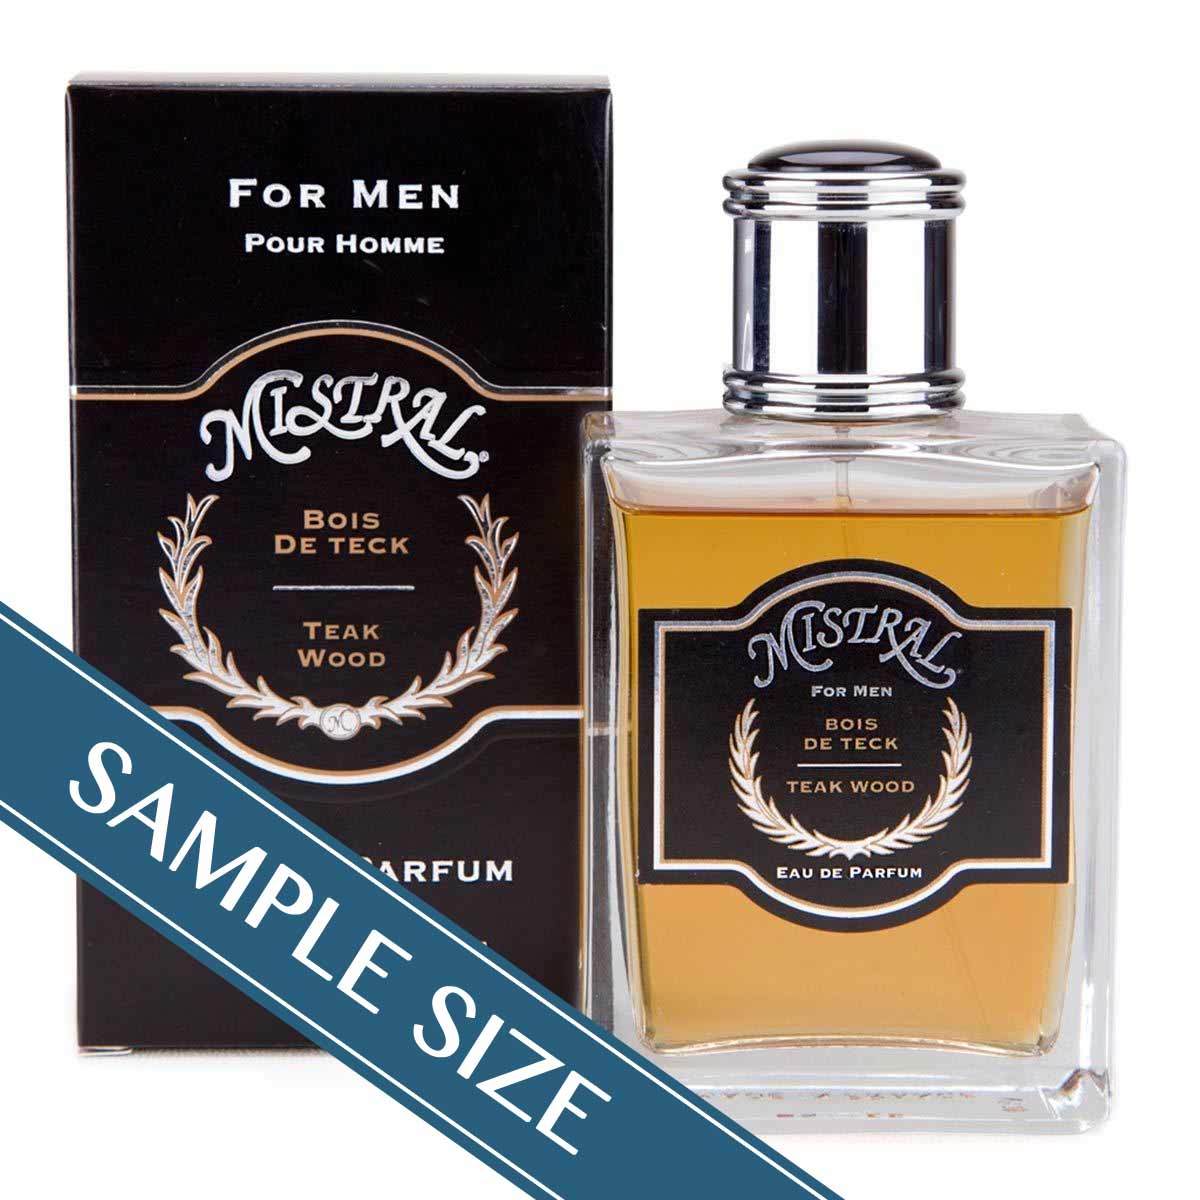 Primary image of Sample - Teak Wood Eau de Parfum